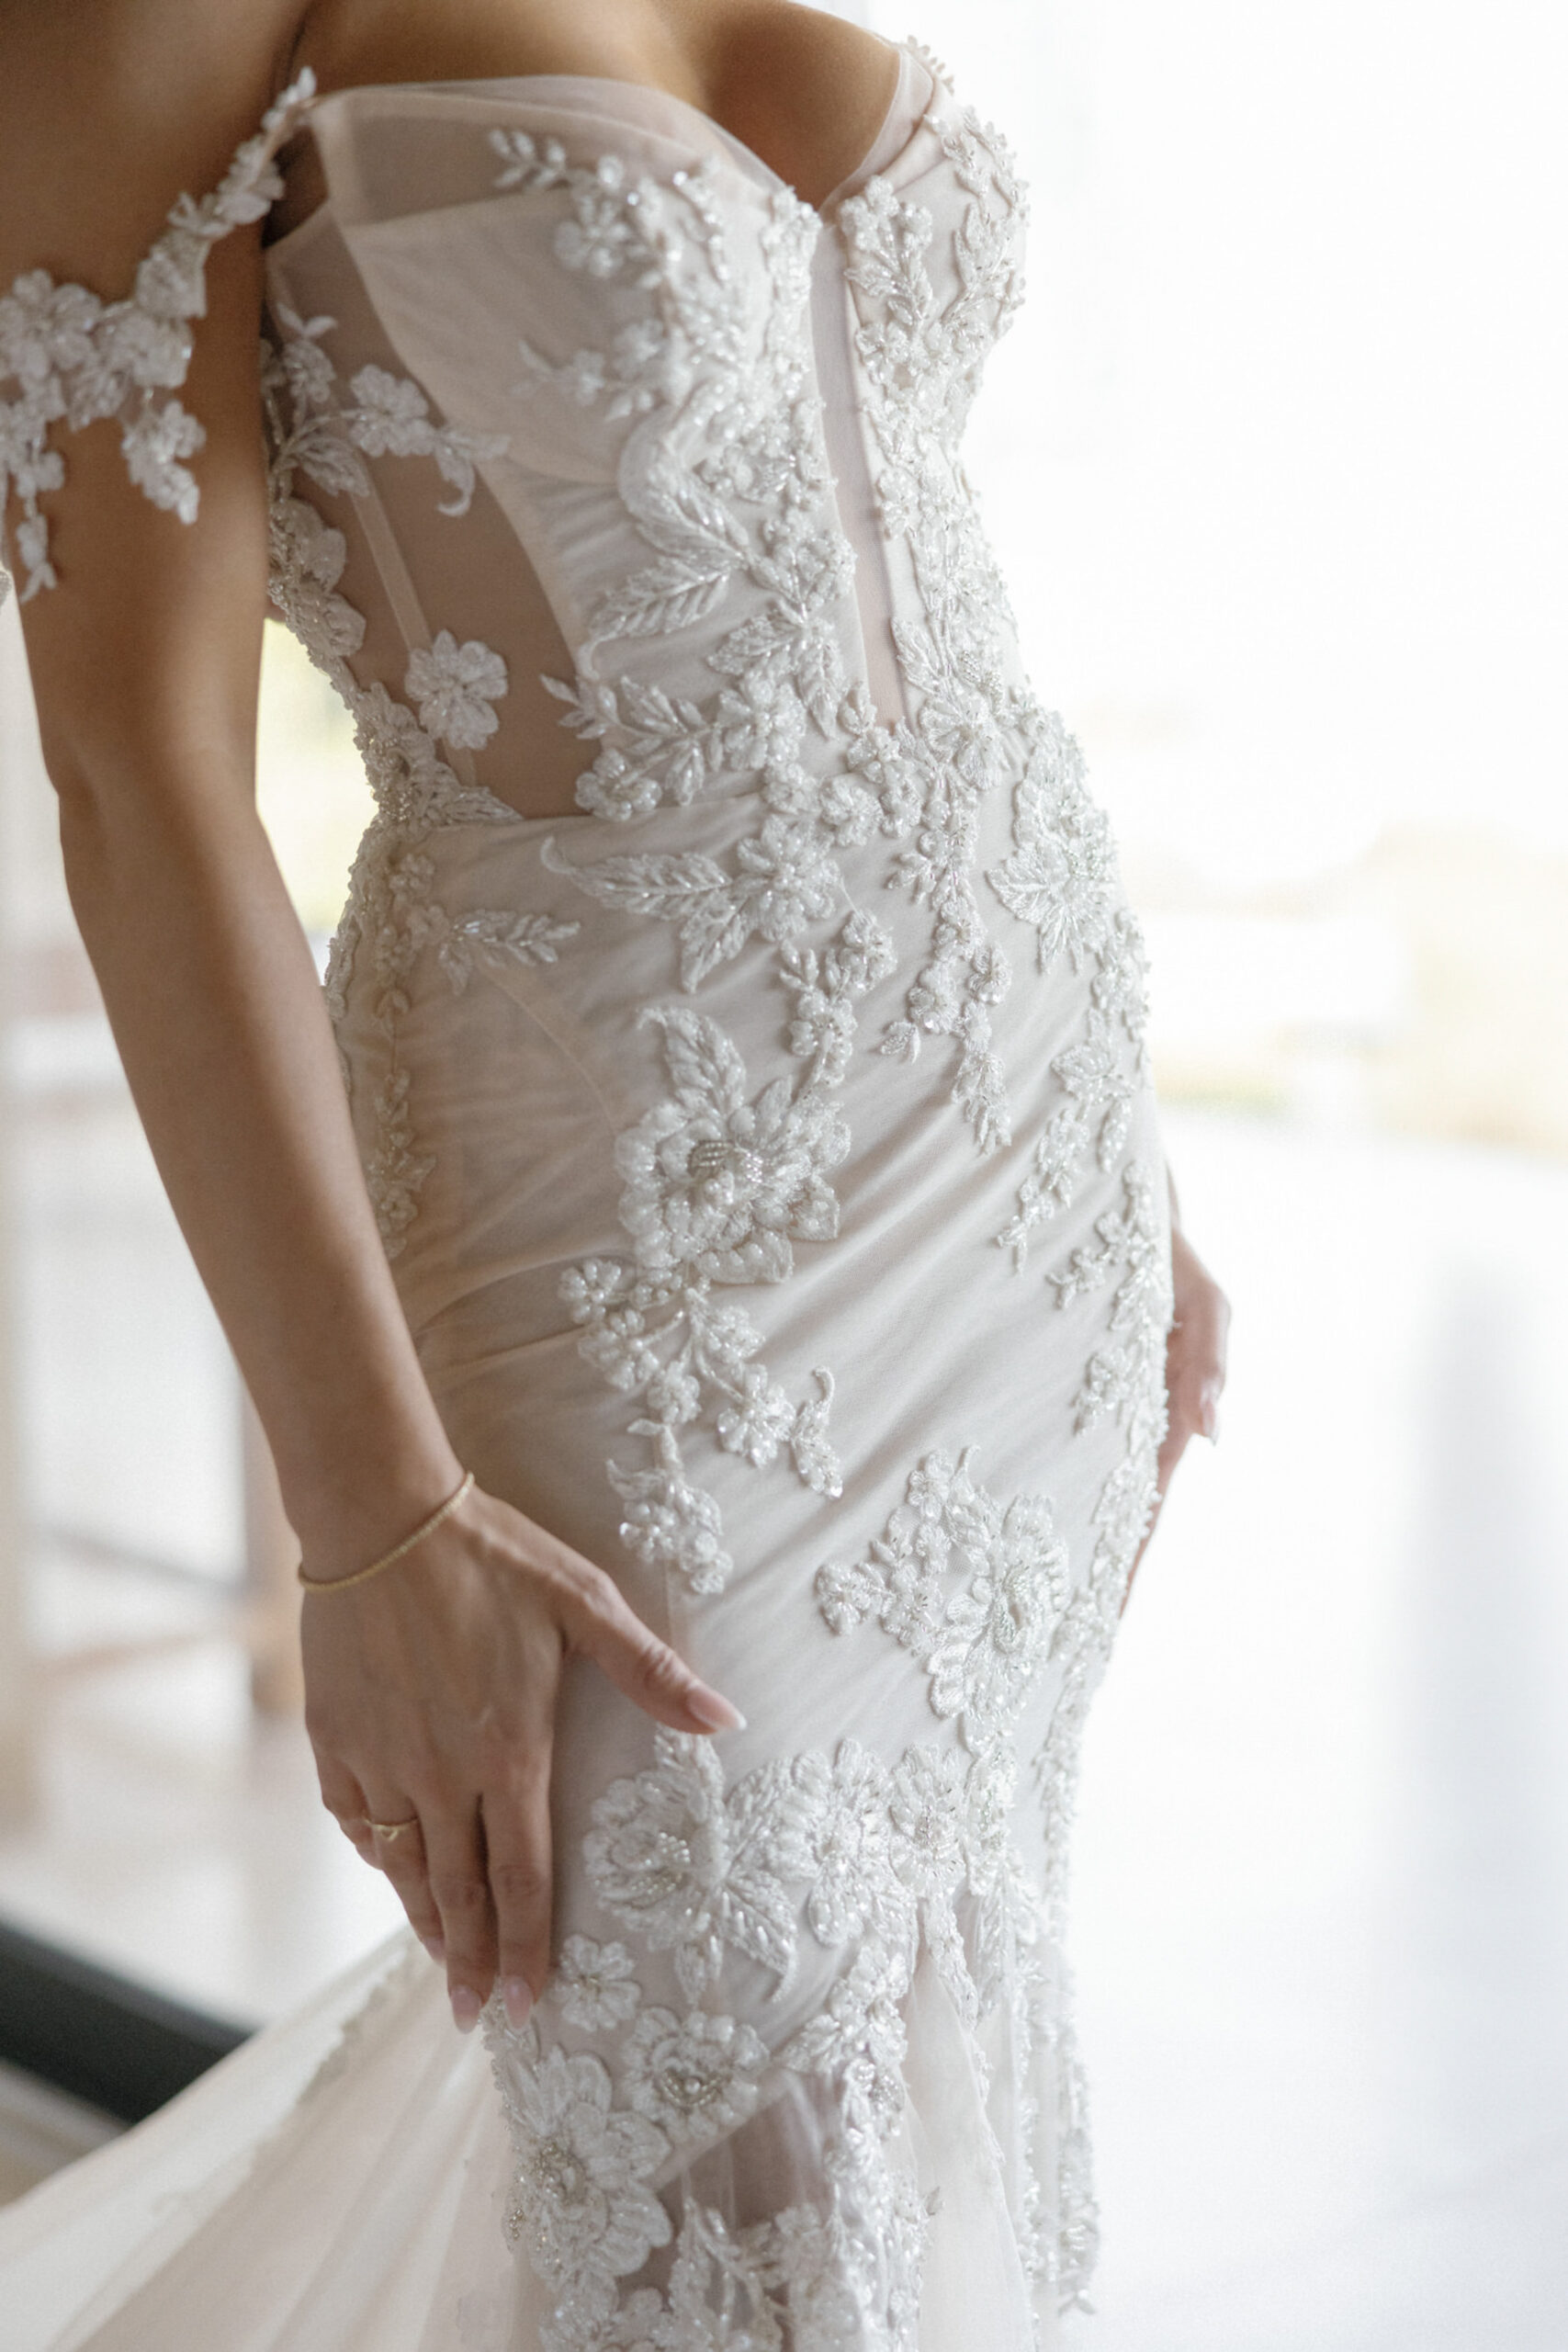 What should a bride wear under wedding dress 